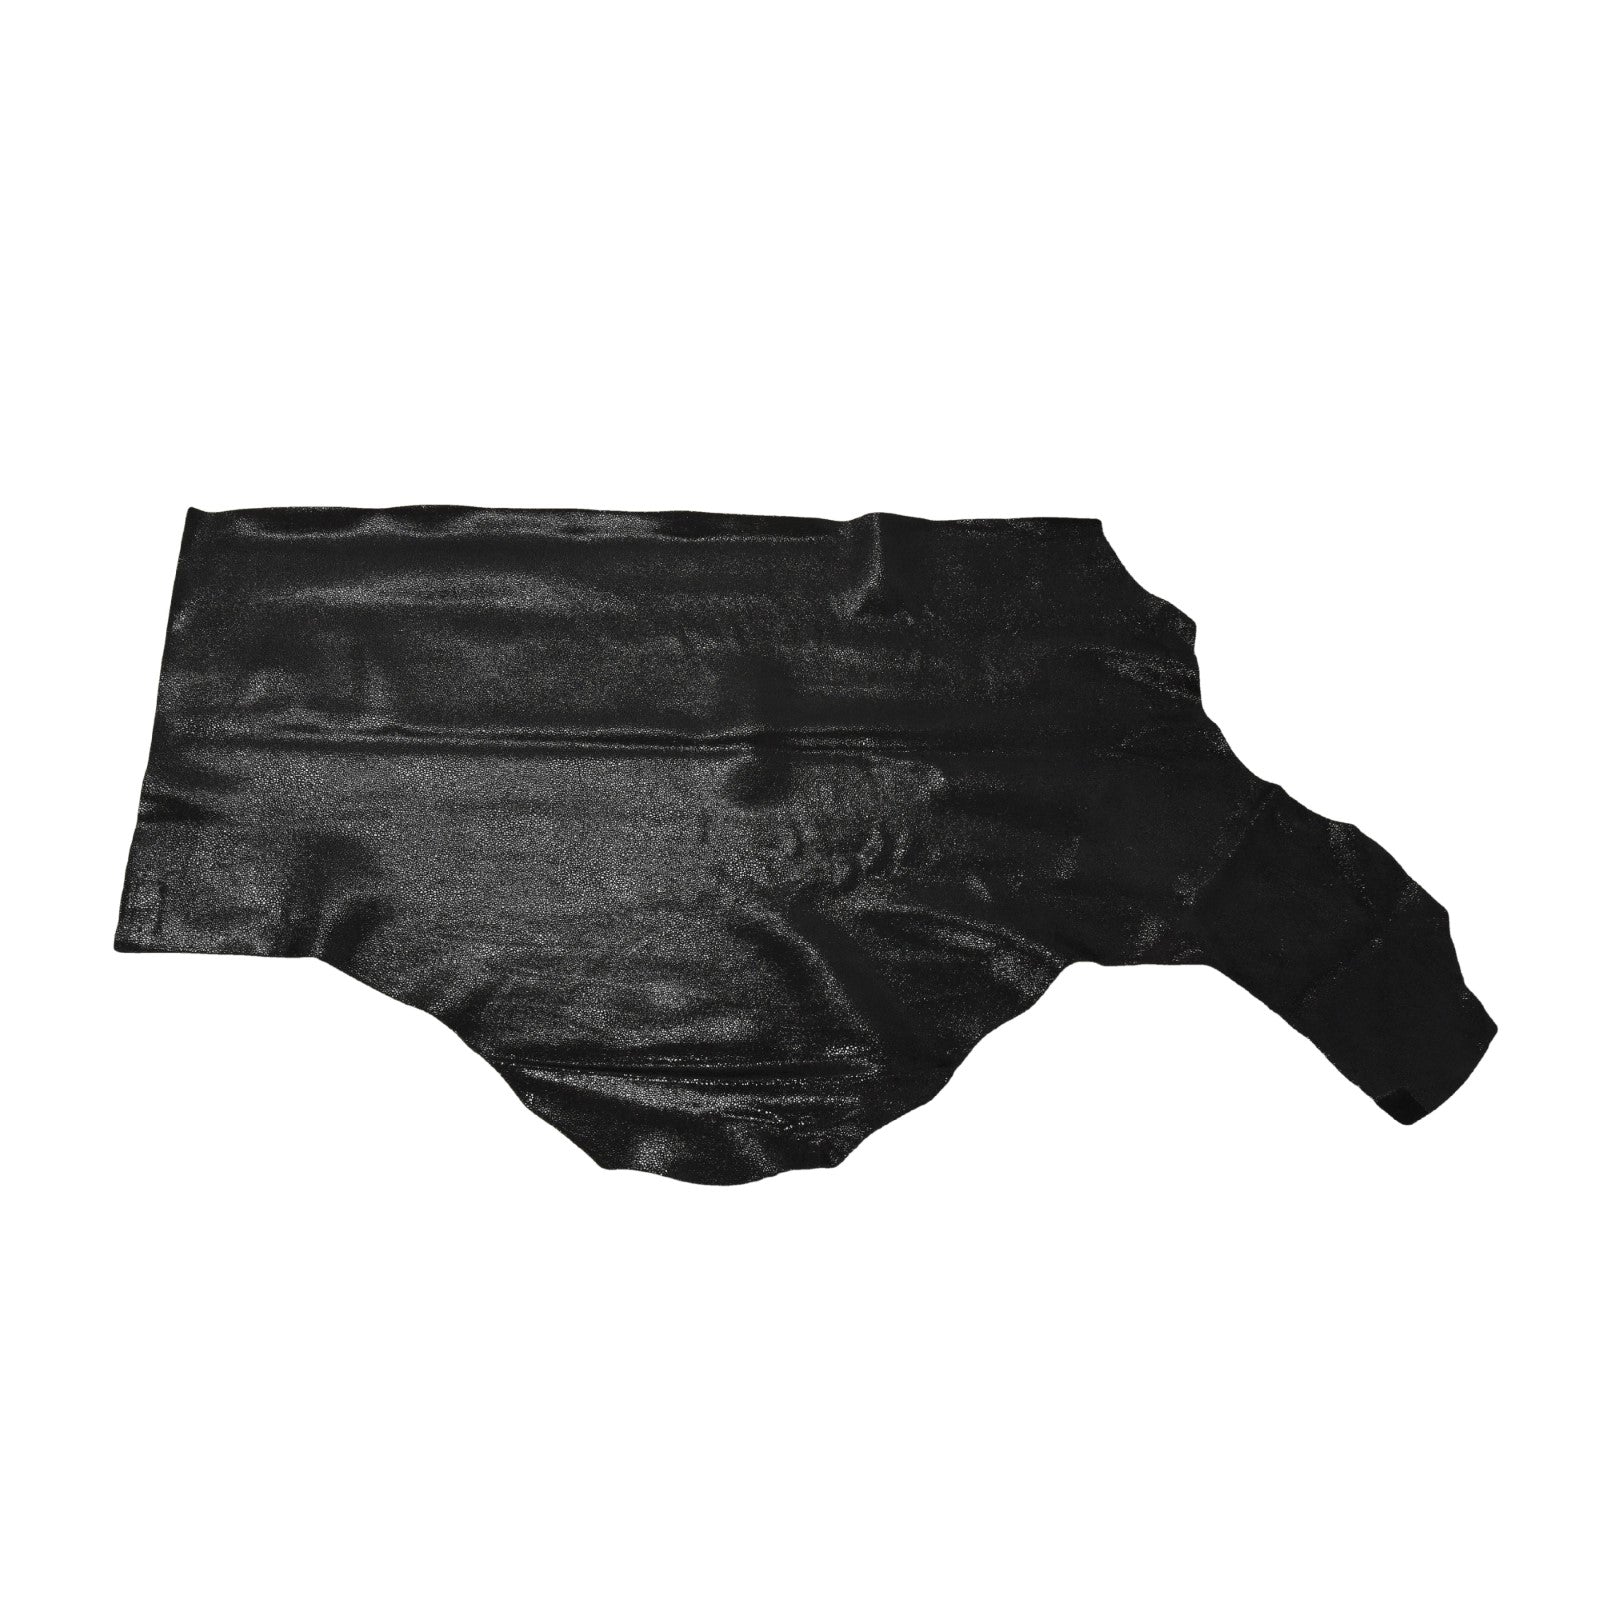 Metallic Black Sizzling Stingray 2-3 oz Cow Hides, Bottom Piece / 6.5-7.5 Sq Ft | The Leather Guy